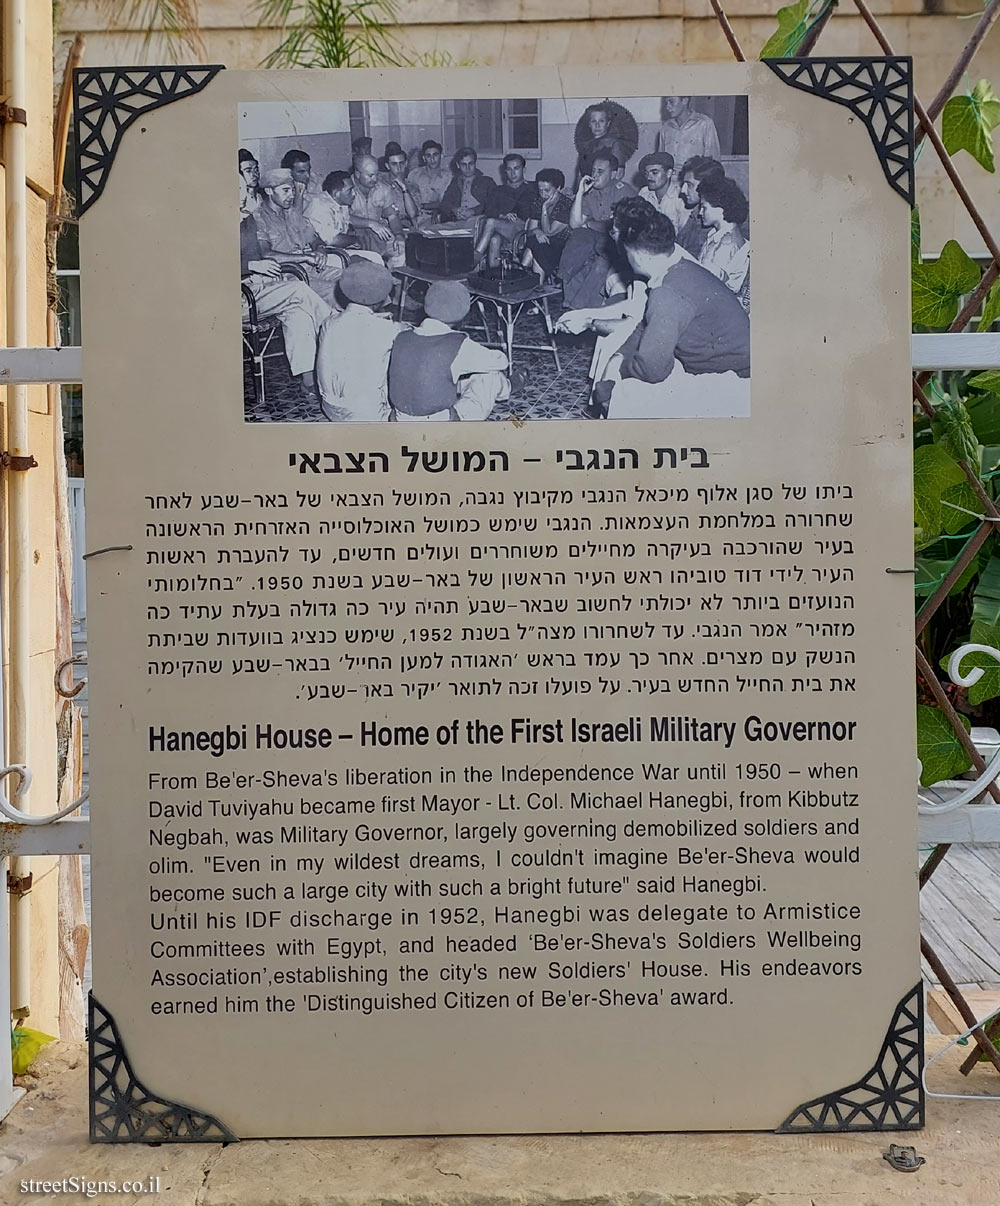 Be’er Sheva - Hanegbi House - Home of the First Israeli Military Governor